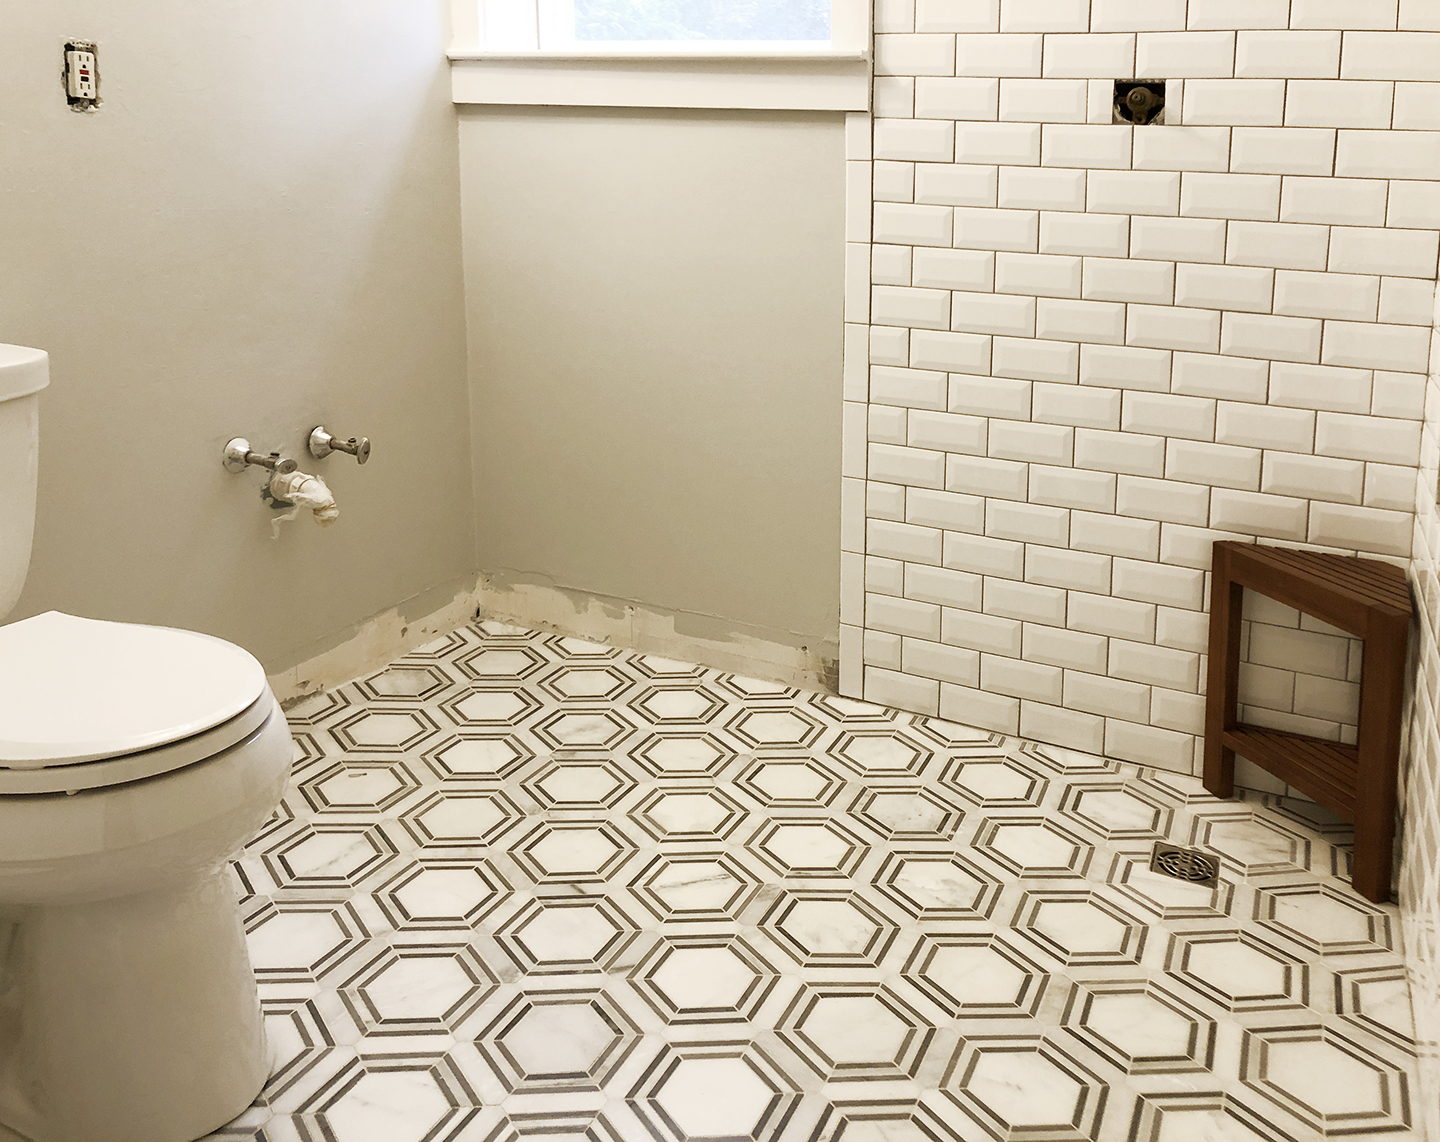 One Room Challenge: Bathroom Accessories Shopping List (+ Major Progress!) /// By Design Fixation #diy #bathroom #decor